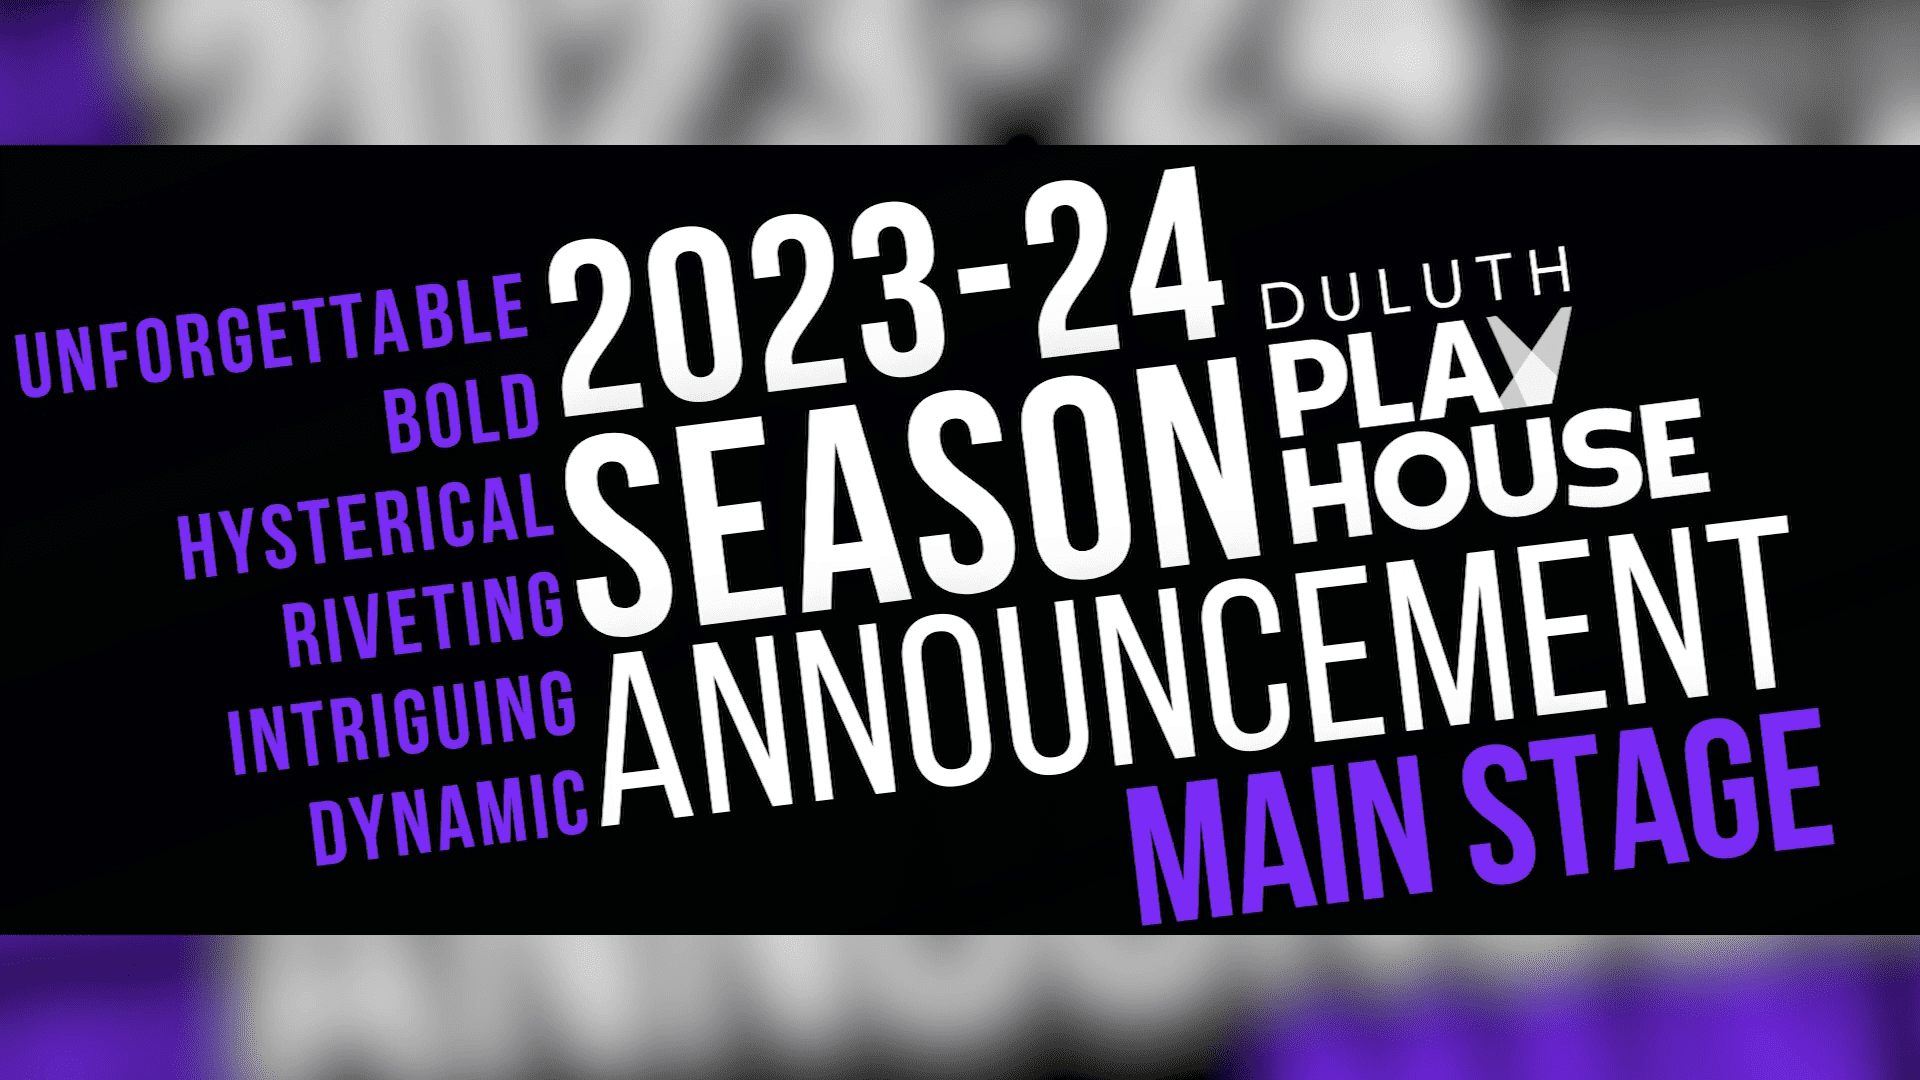 Duluth Playhouse announces their 20232024 Main Stage season